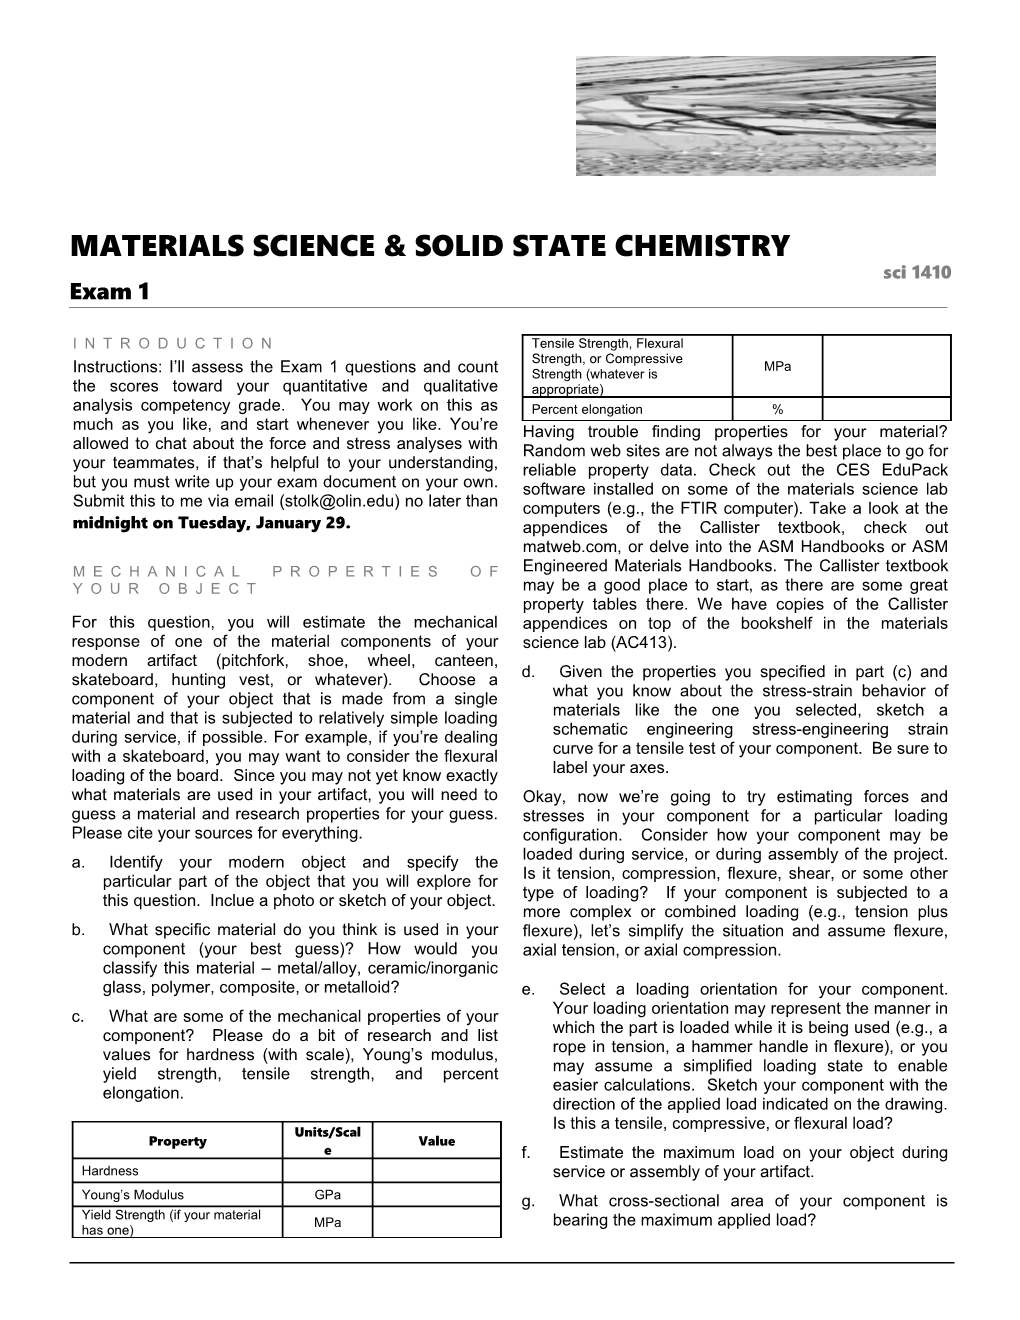 Principles of Materials Science